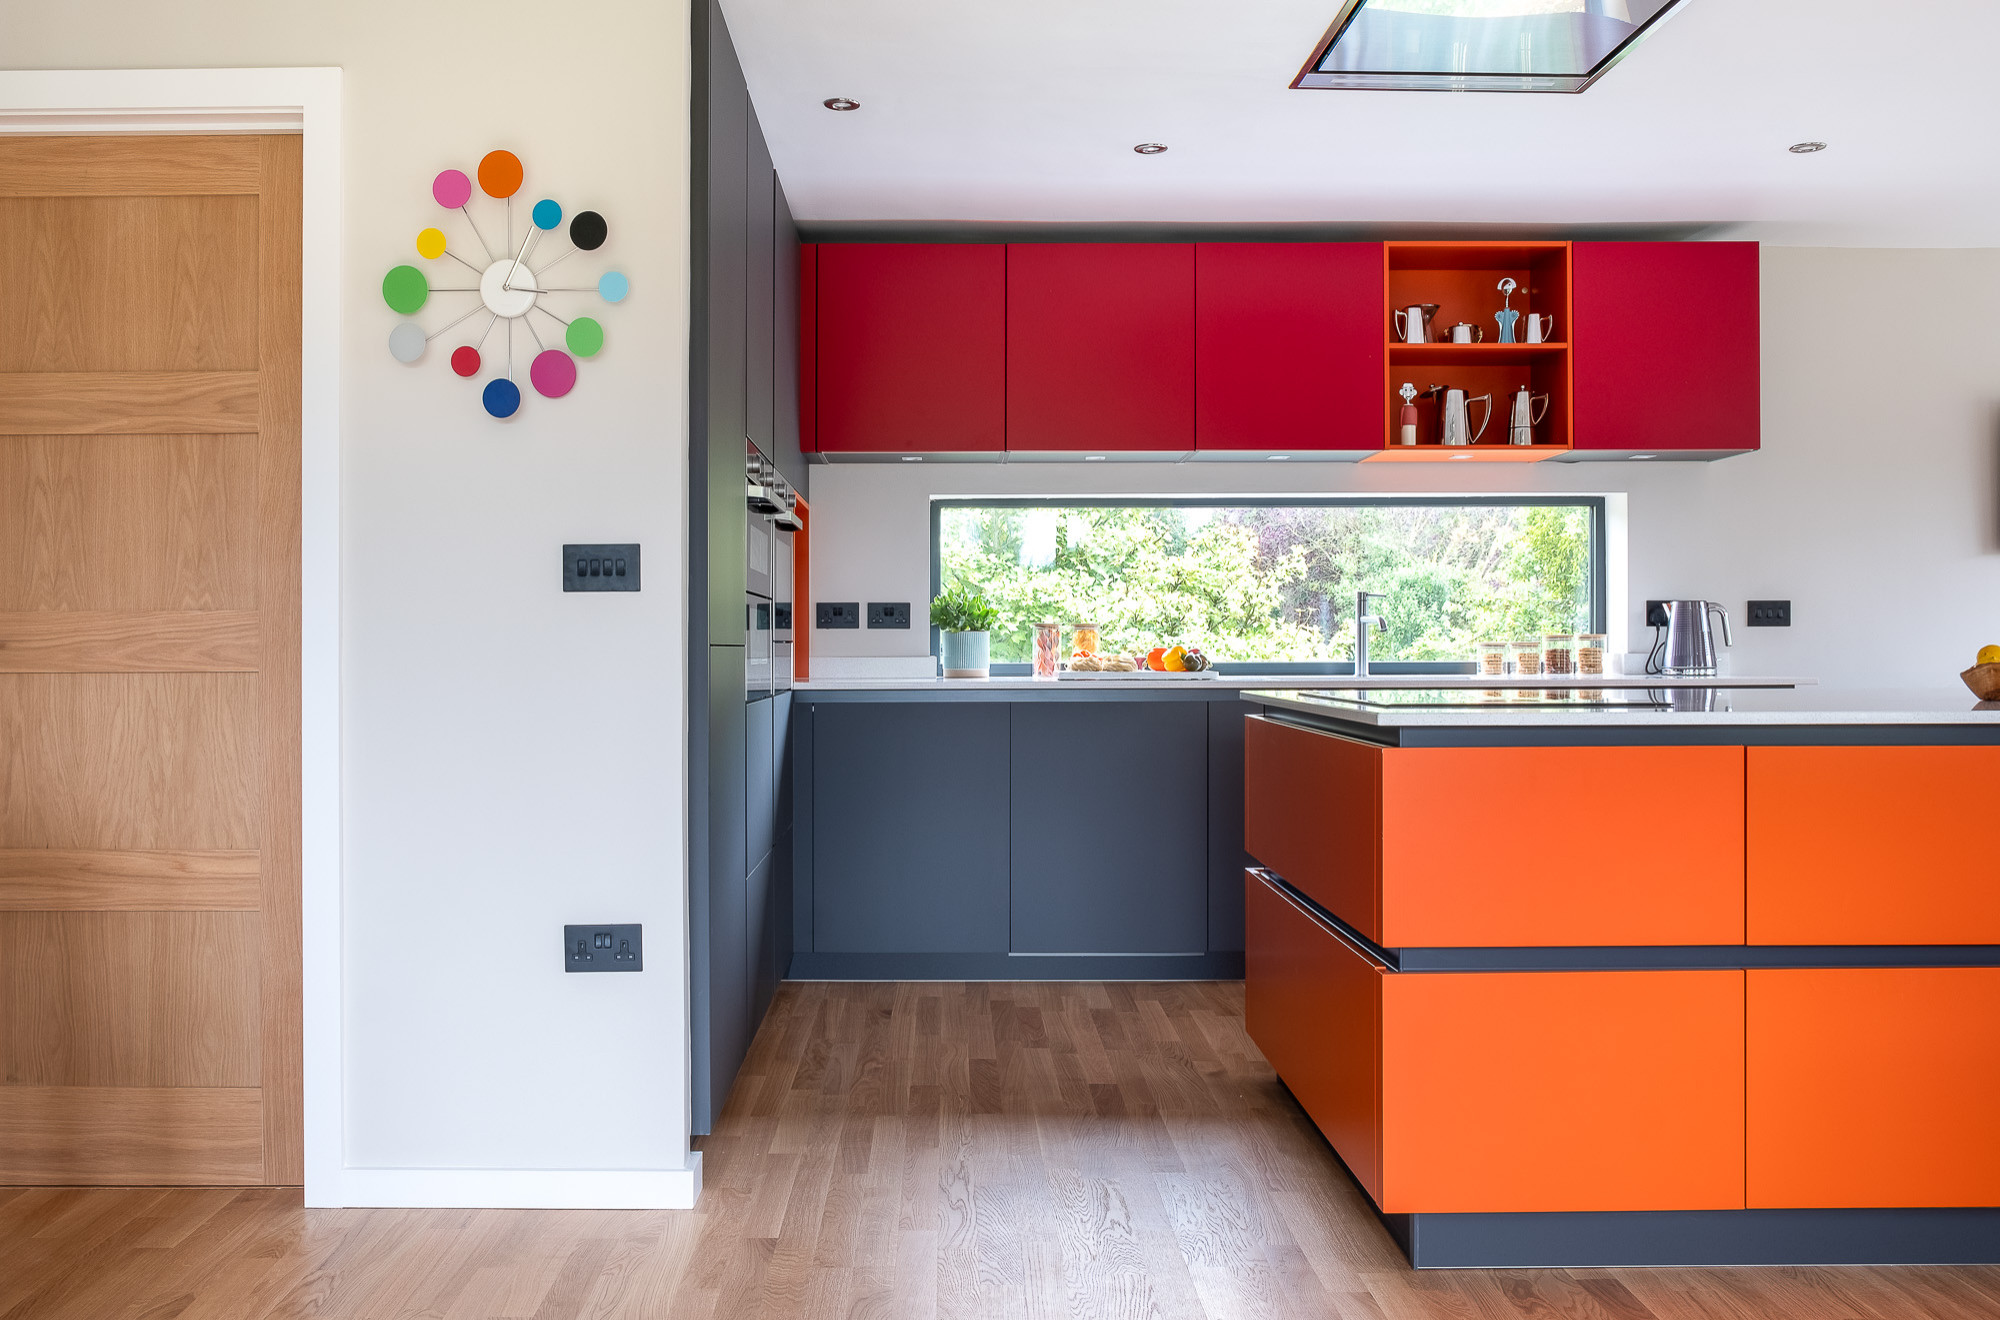 63+ Colorful Kitchen Ideas (JOYFUL & BRIGHT) - Beautiful Kitchen Design